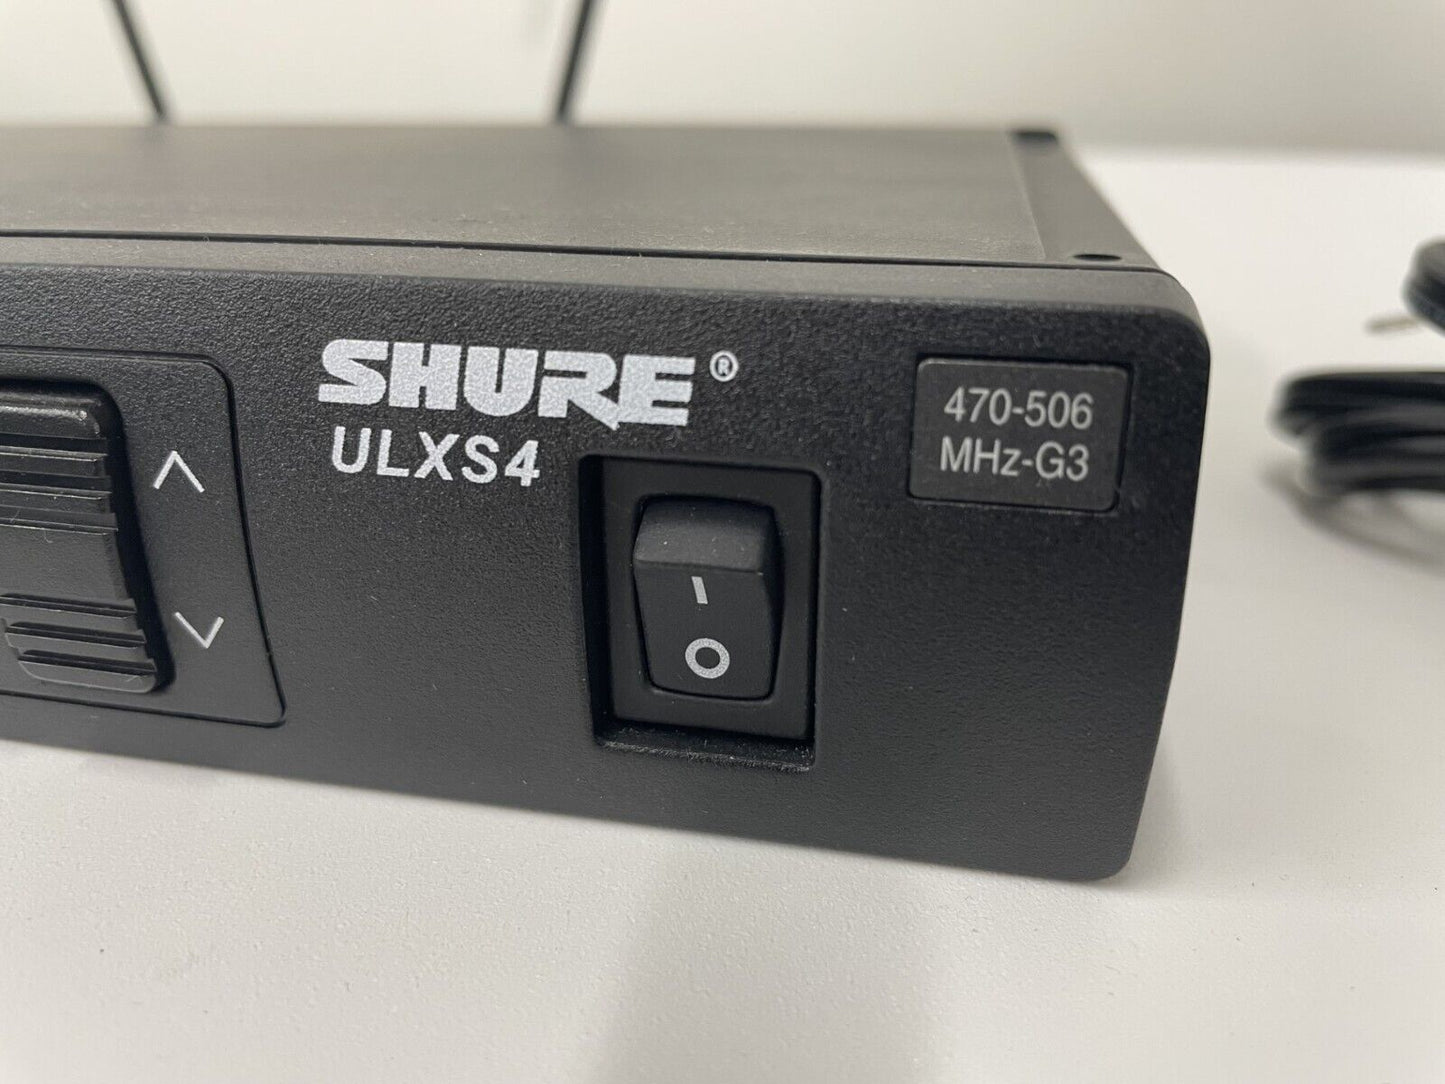 Shure ULX UHF Wireless Handheld System Beta58 Beta 58 Microphone G3 470-506 MHz